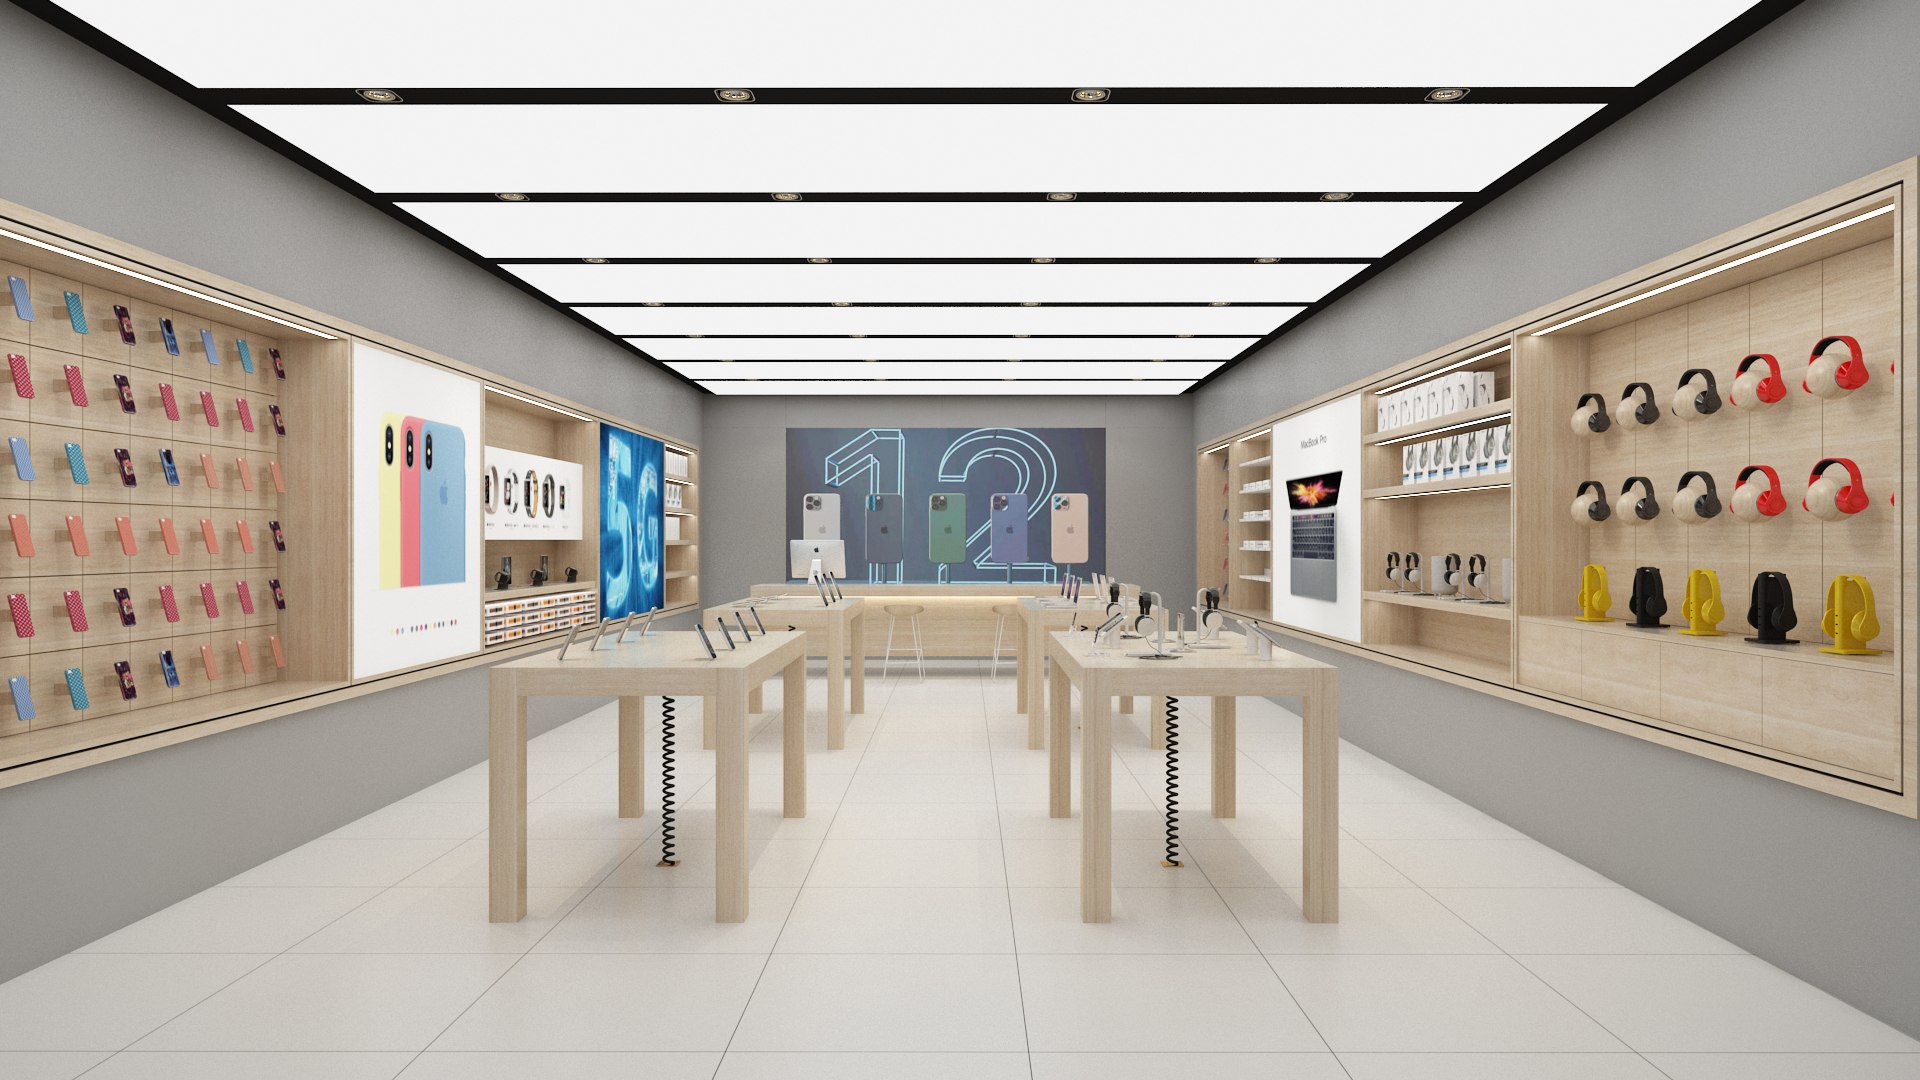 apple store interior